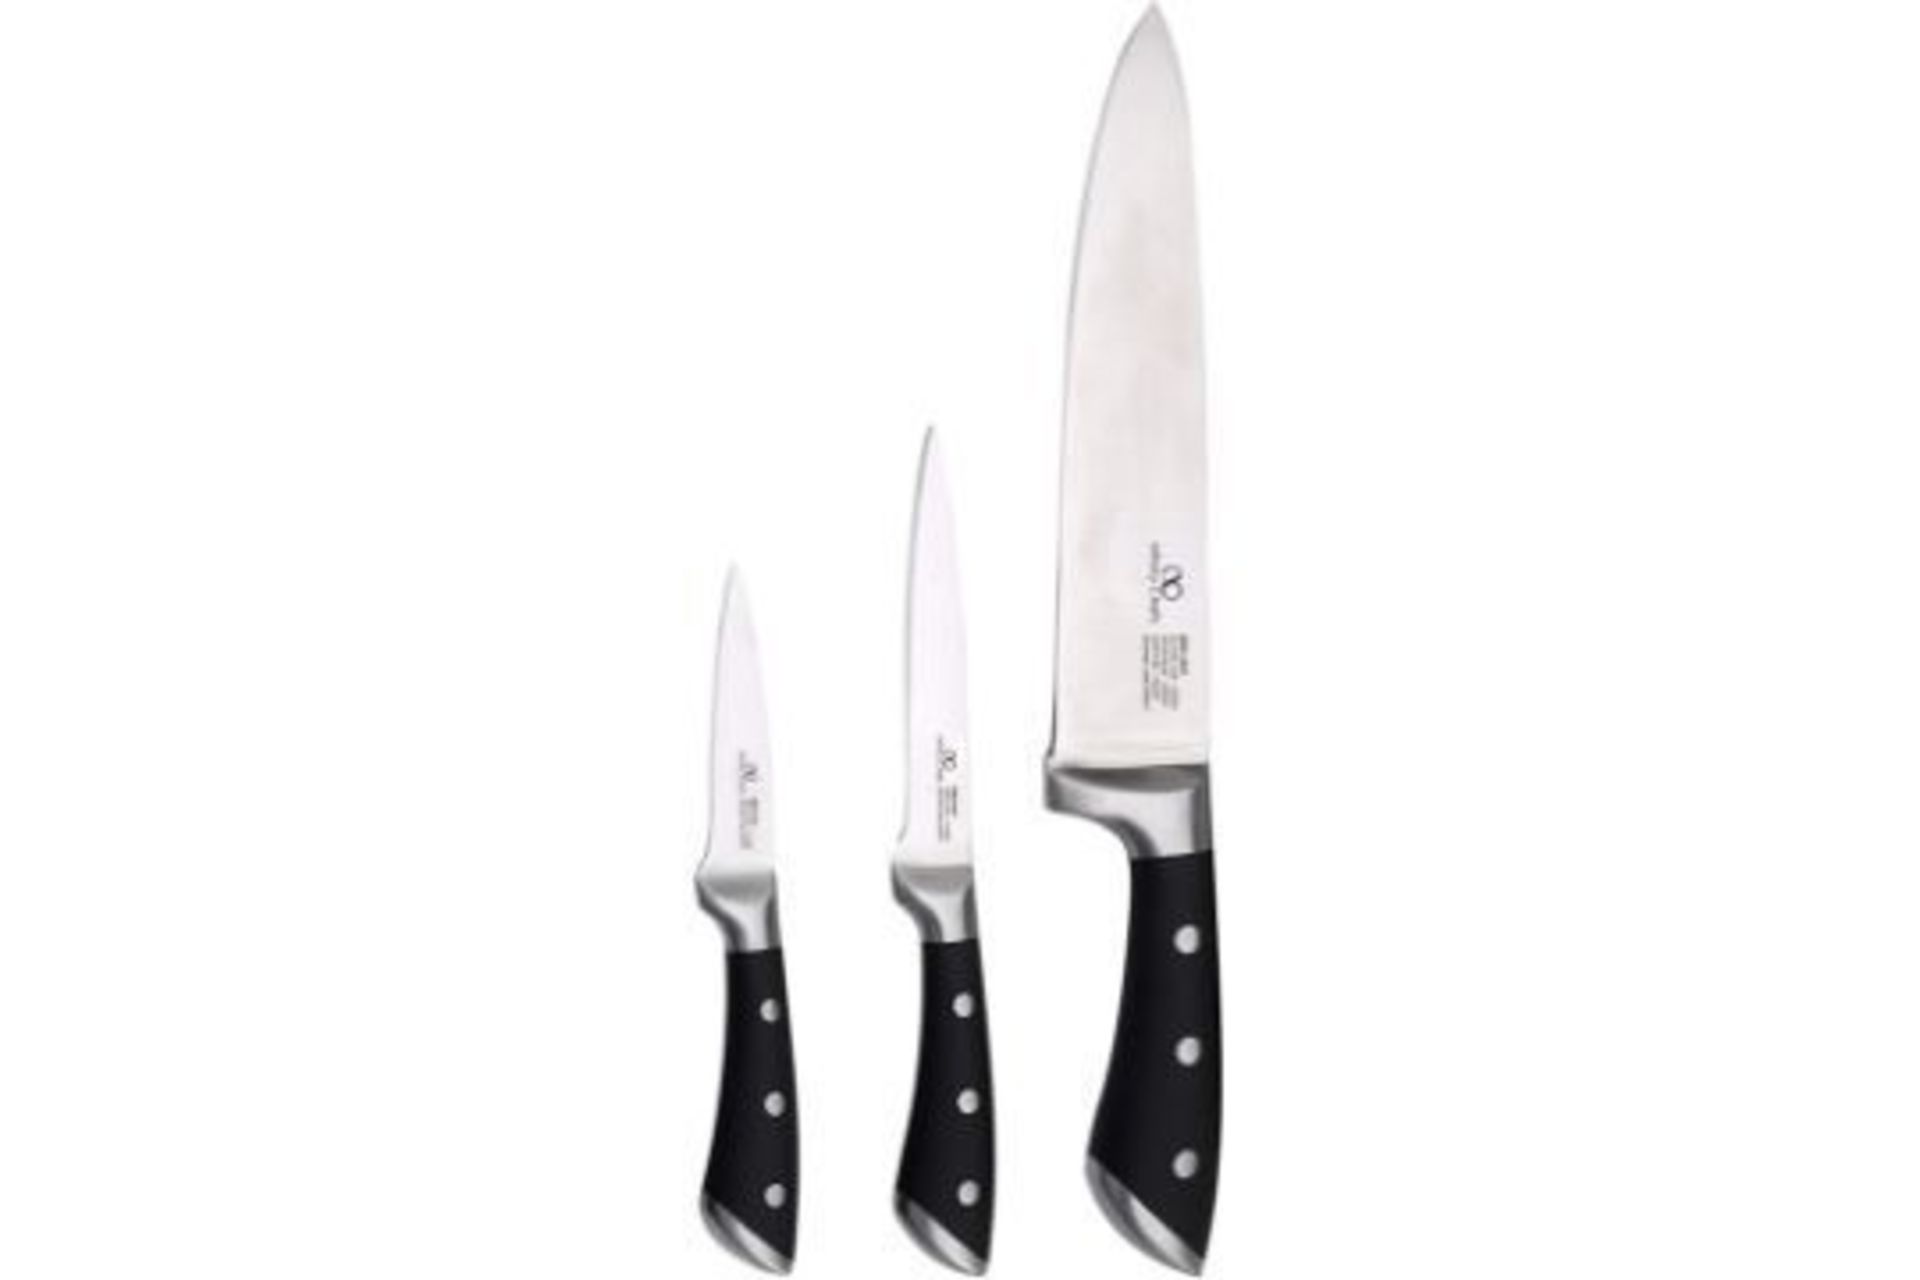 Brand New Bergner Infinity Chefs Vita 3-Piece Knife Set - RRP £22. - Image 2 of 2